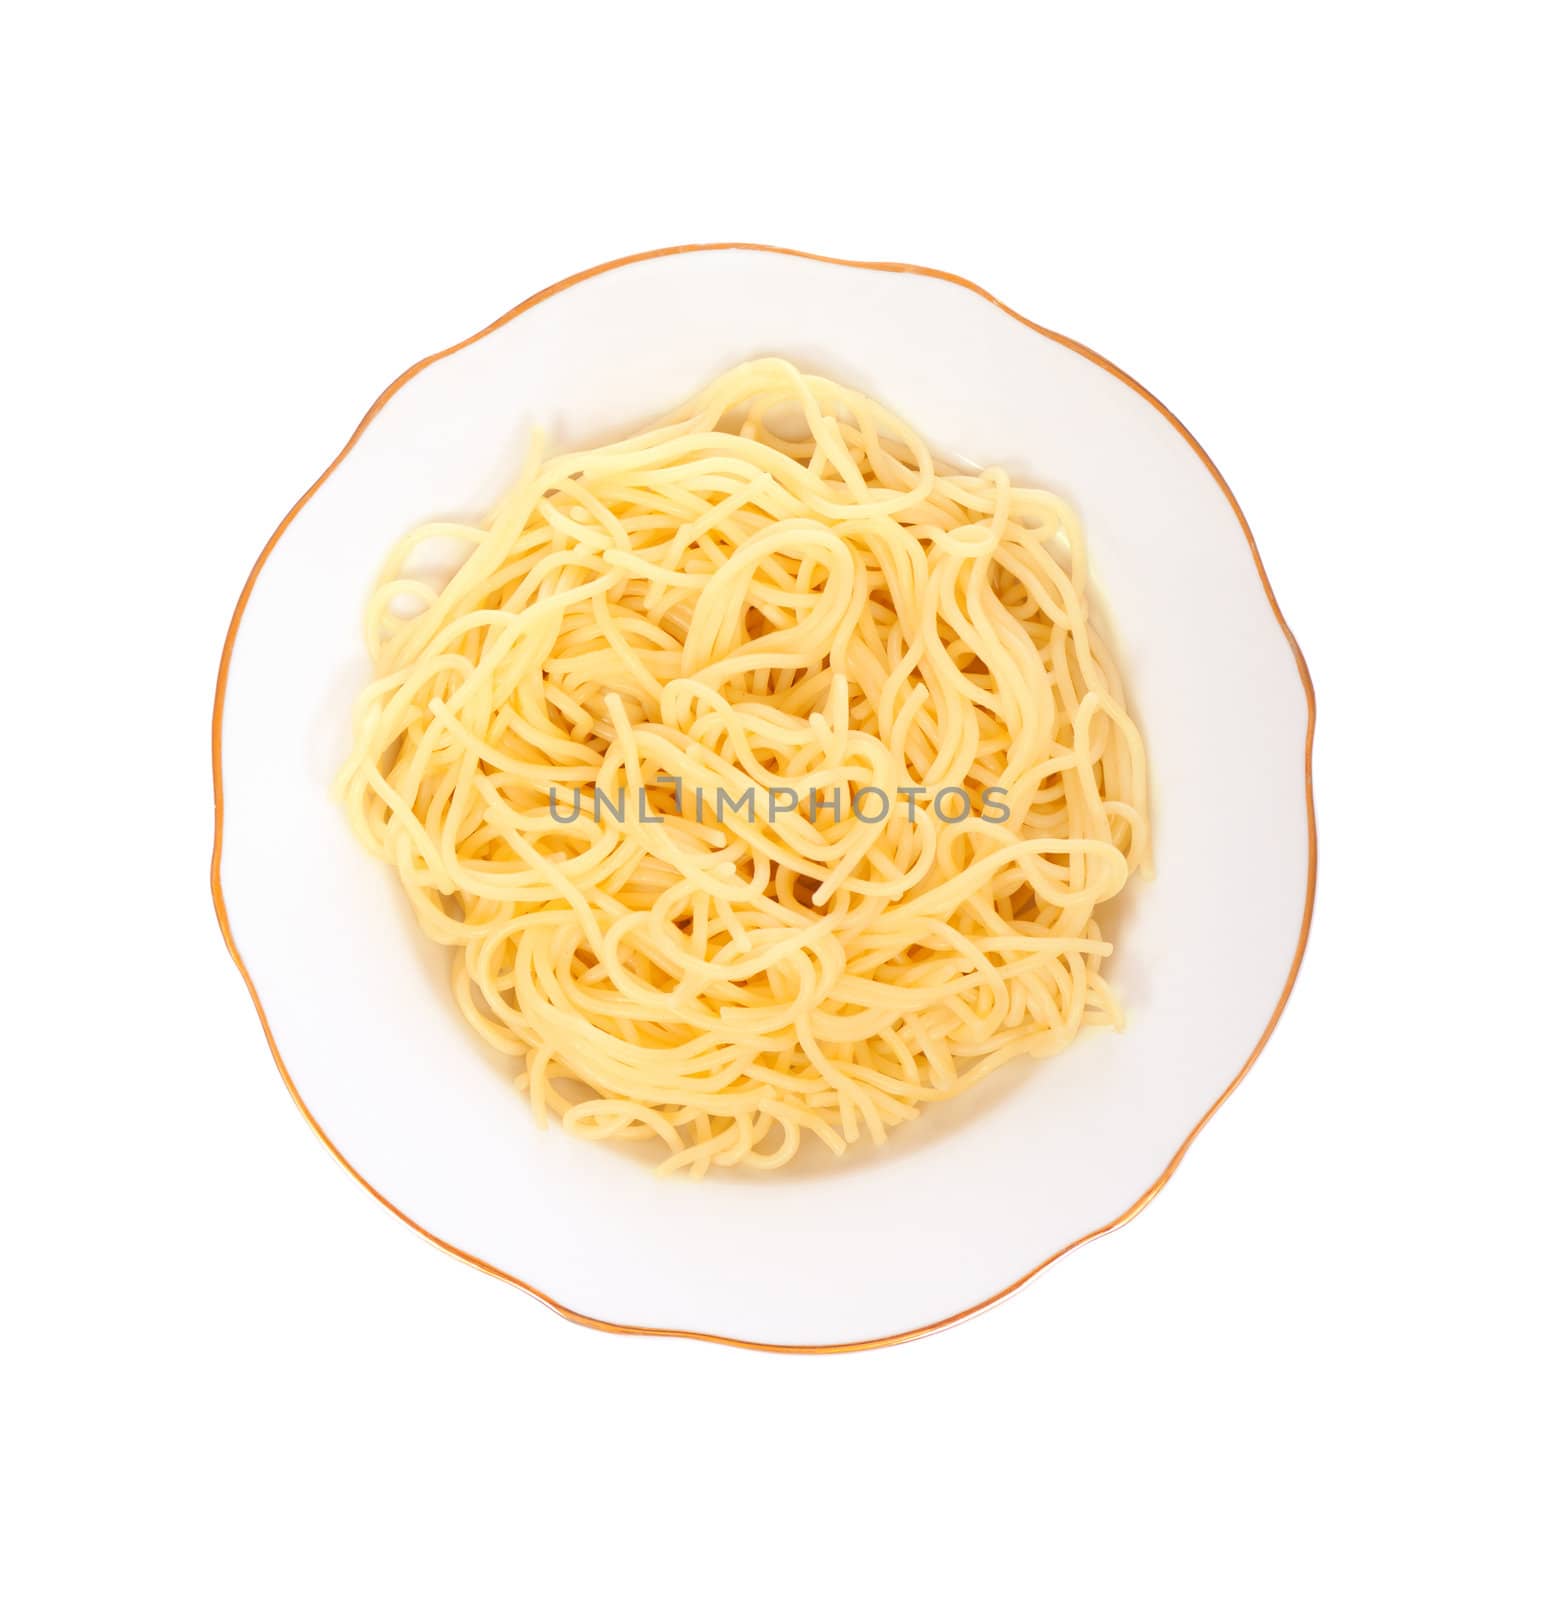 spaghetti on plate by aguirre_mar